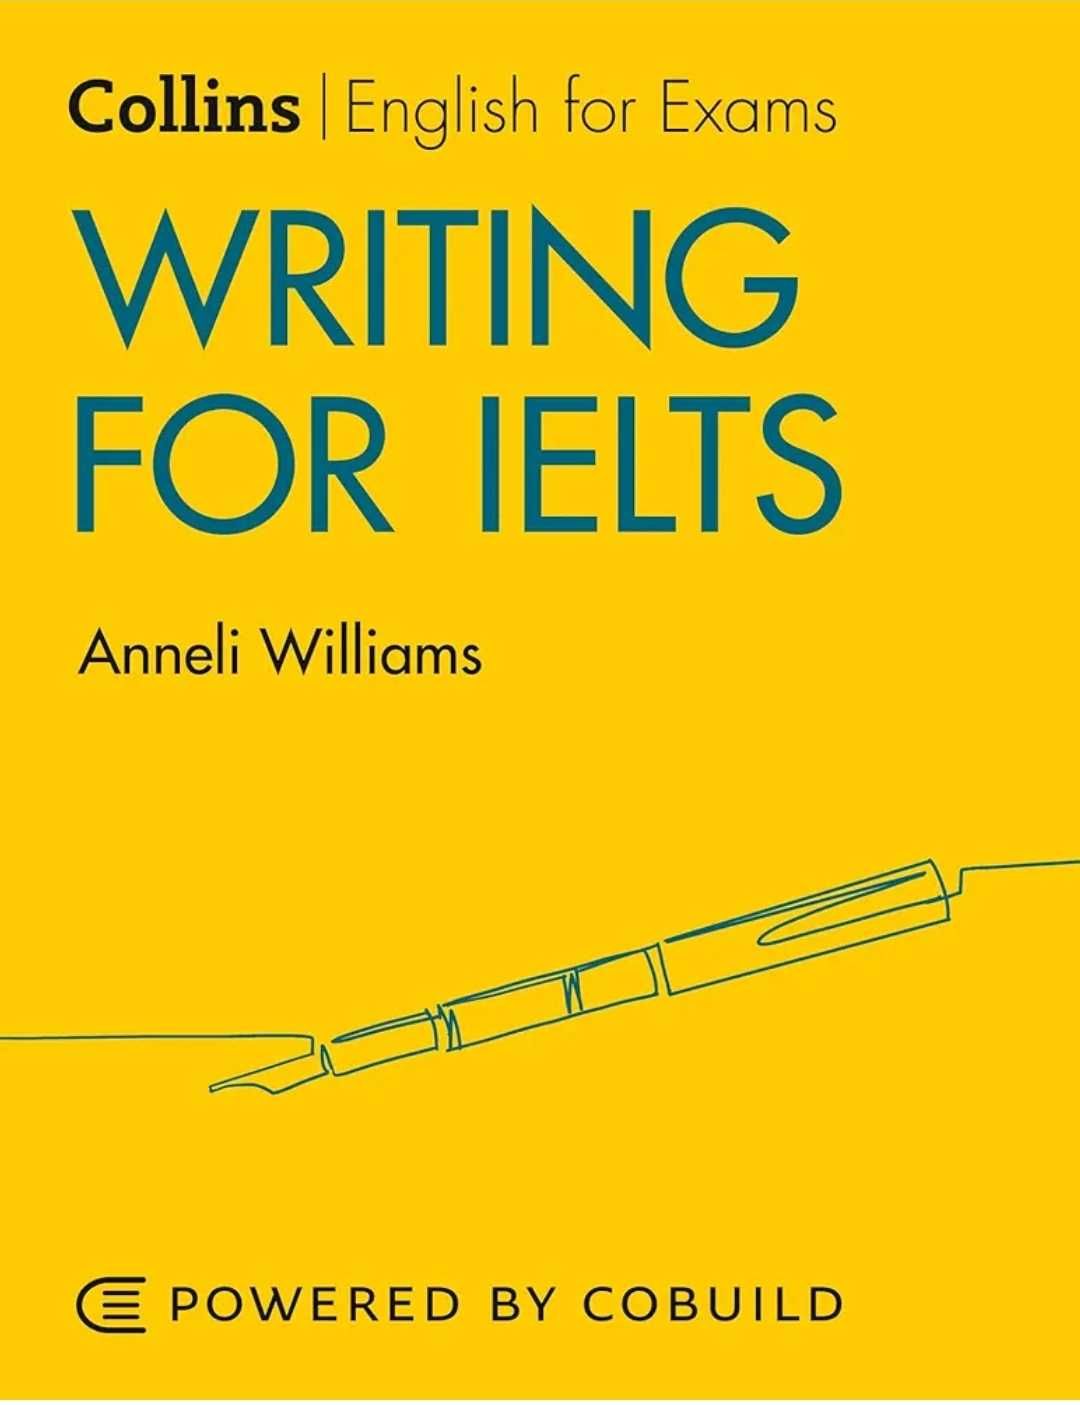 Reading for Ielts, Listening for Ielts, Speaking for Ielts, Writing